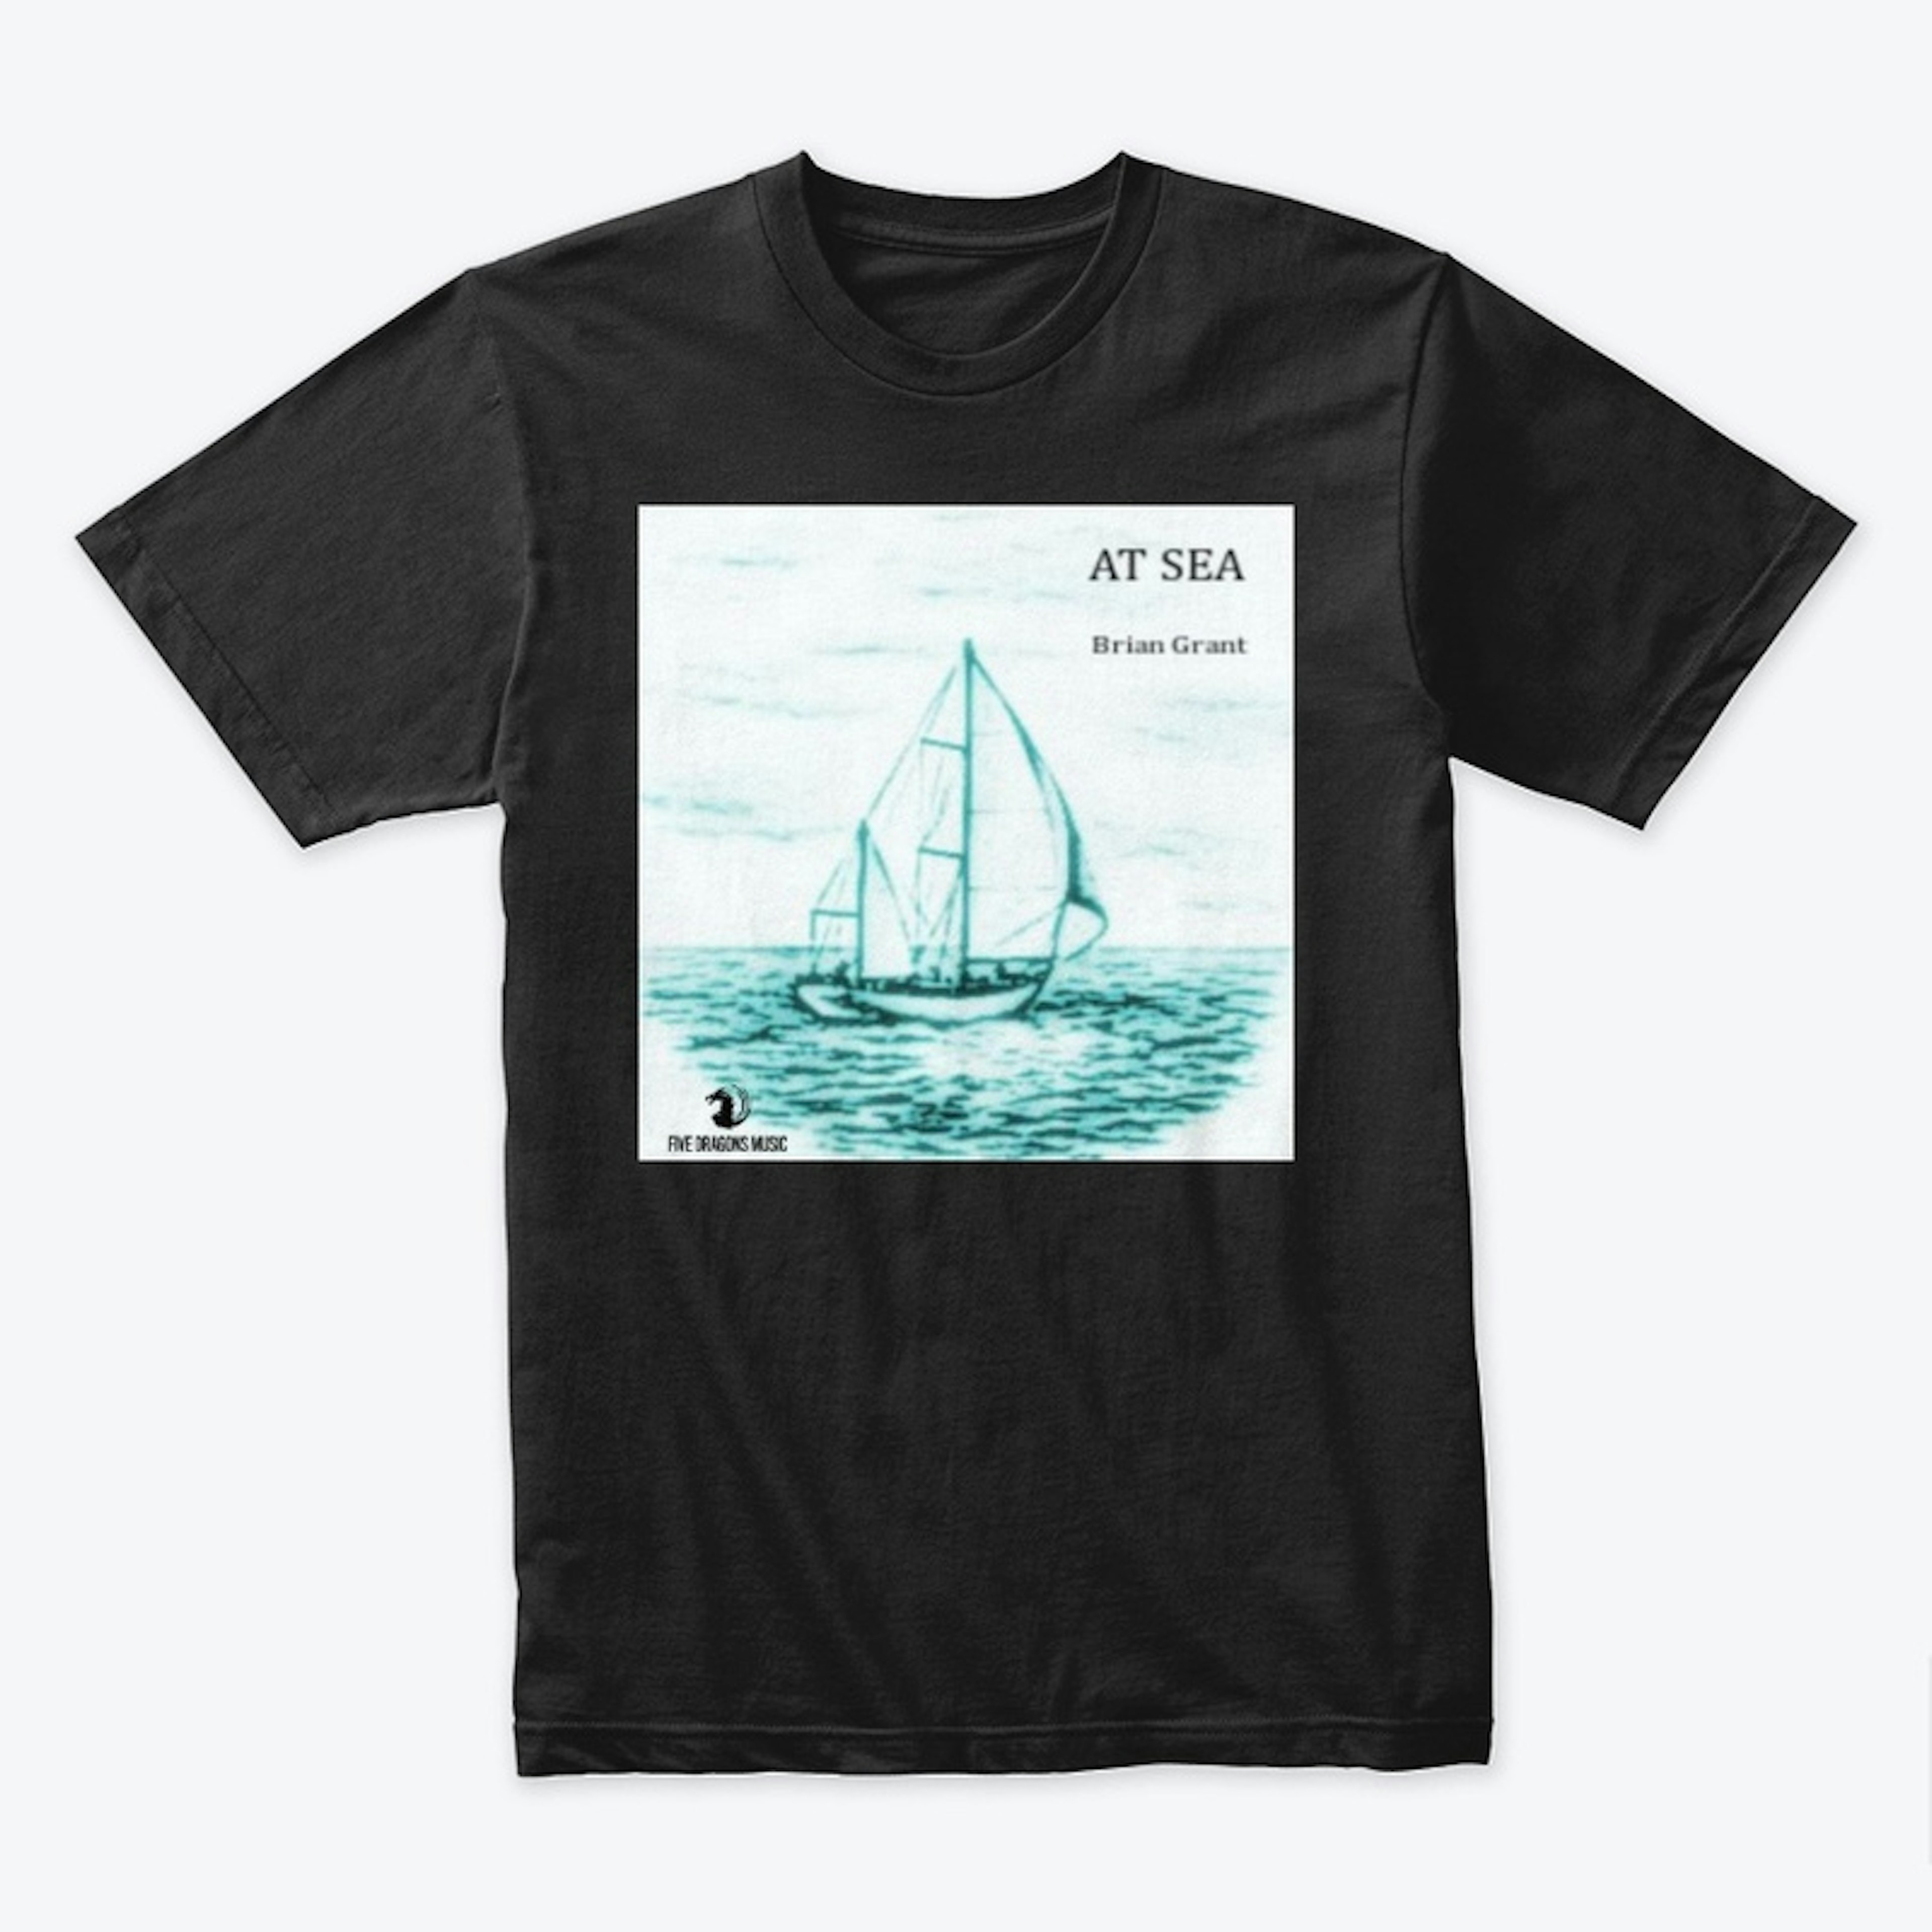 At Sea - Album Cover T-Shirt